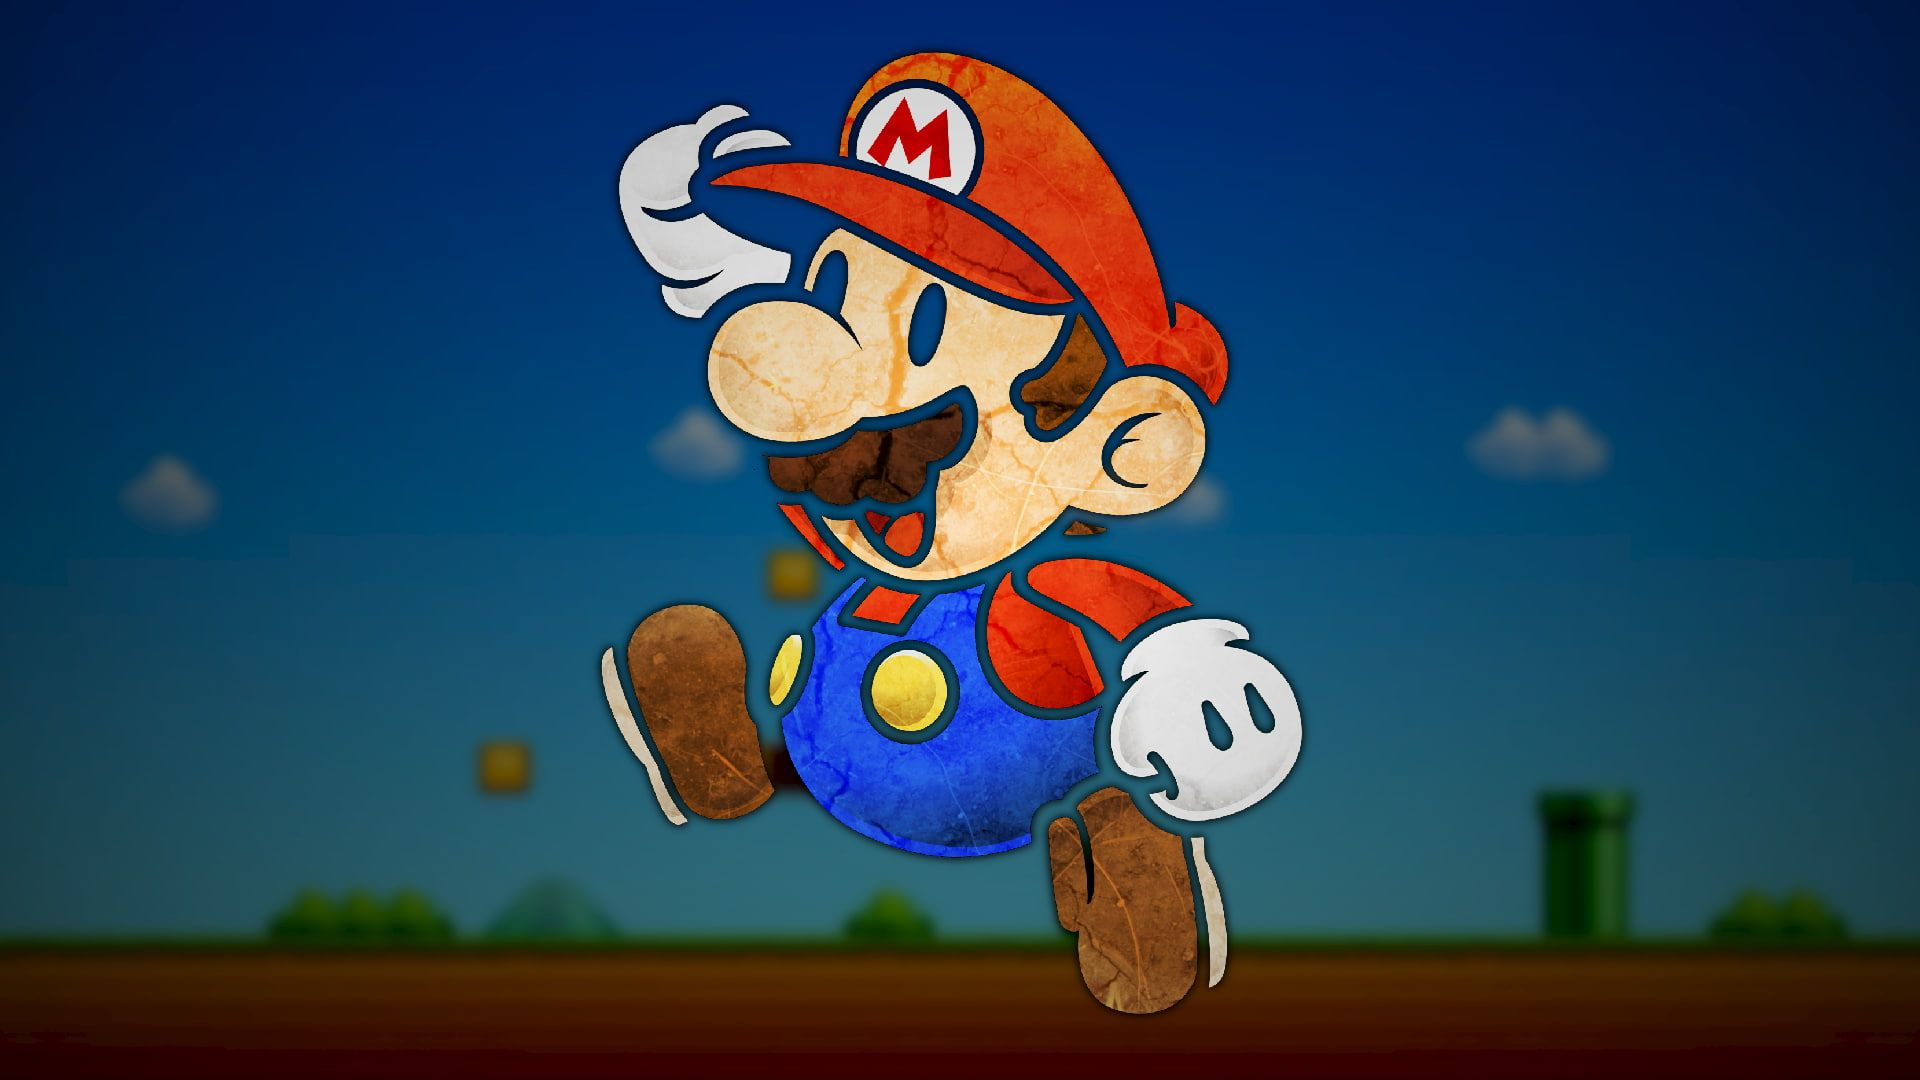 1920x1080 Super Mario Paper Mario video games digital art #Nintendo #artwork #1080P # wallpaper #hdwallpaper #desktop | Paper mario, Hd wallpaper, Wallpaper backgrounds